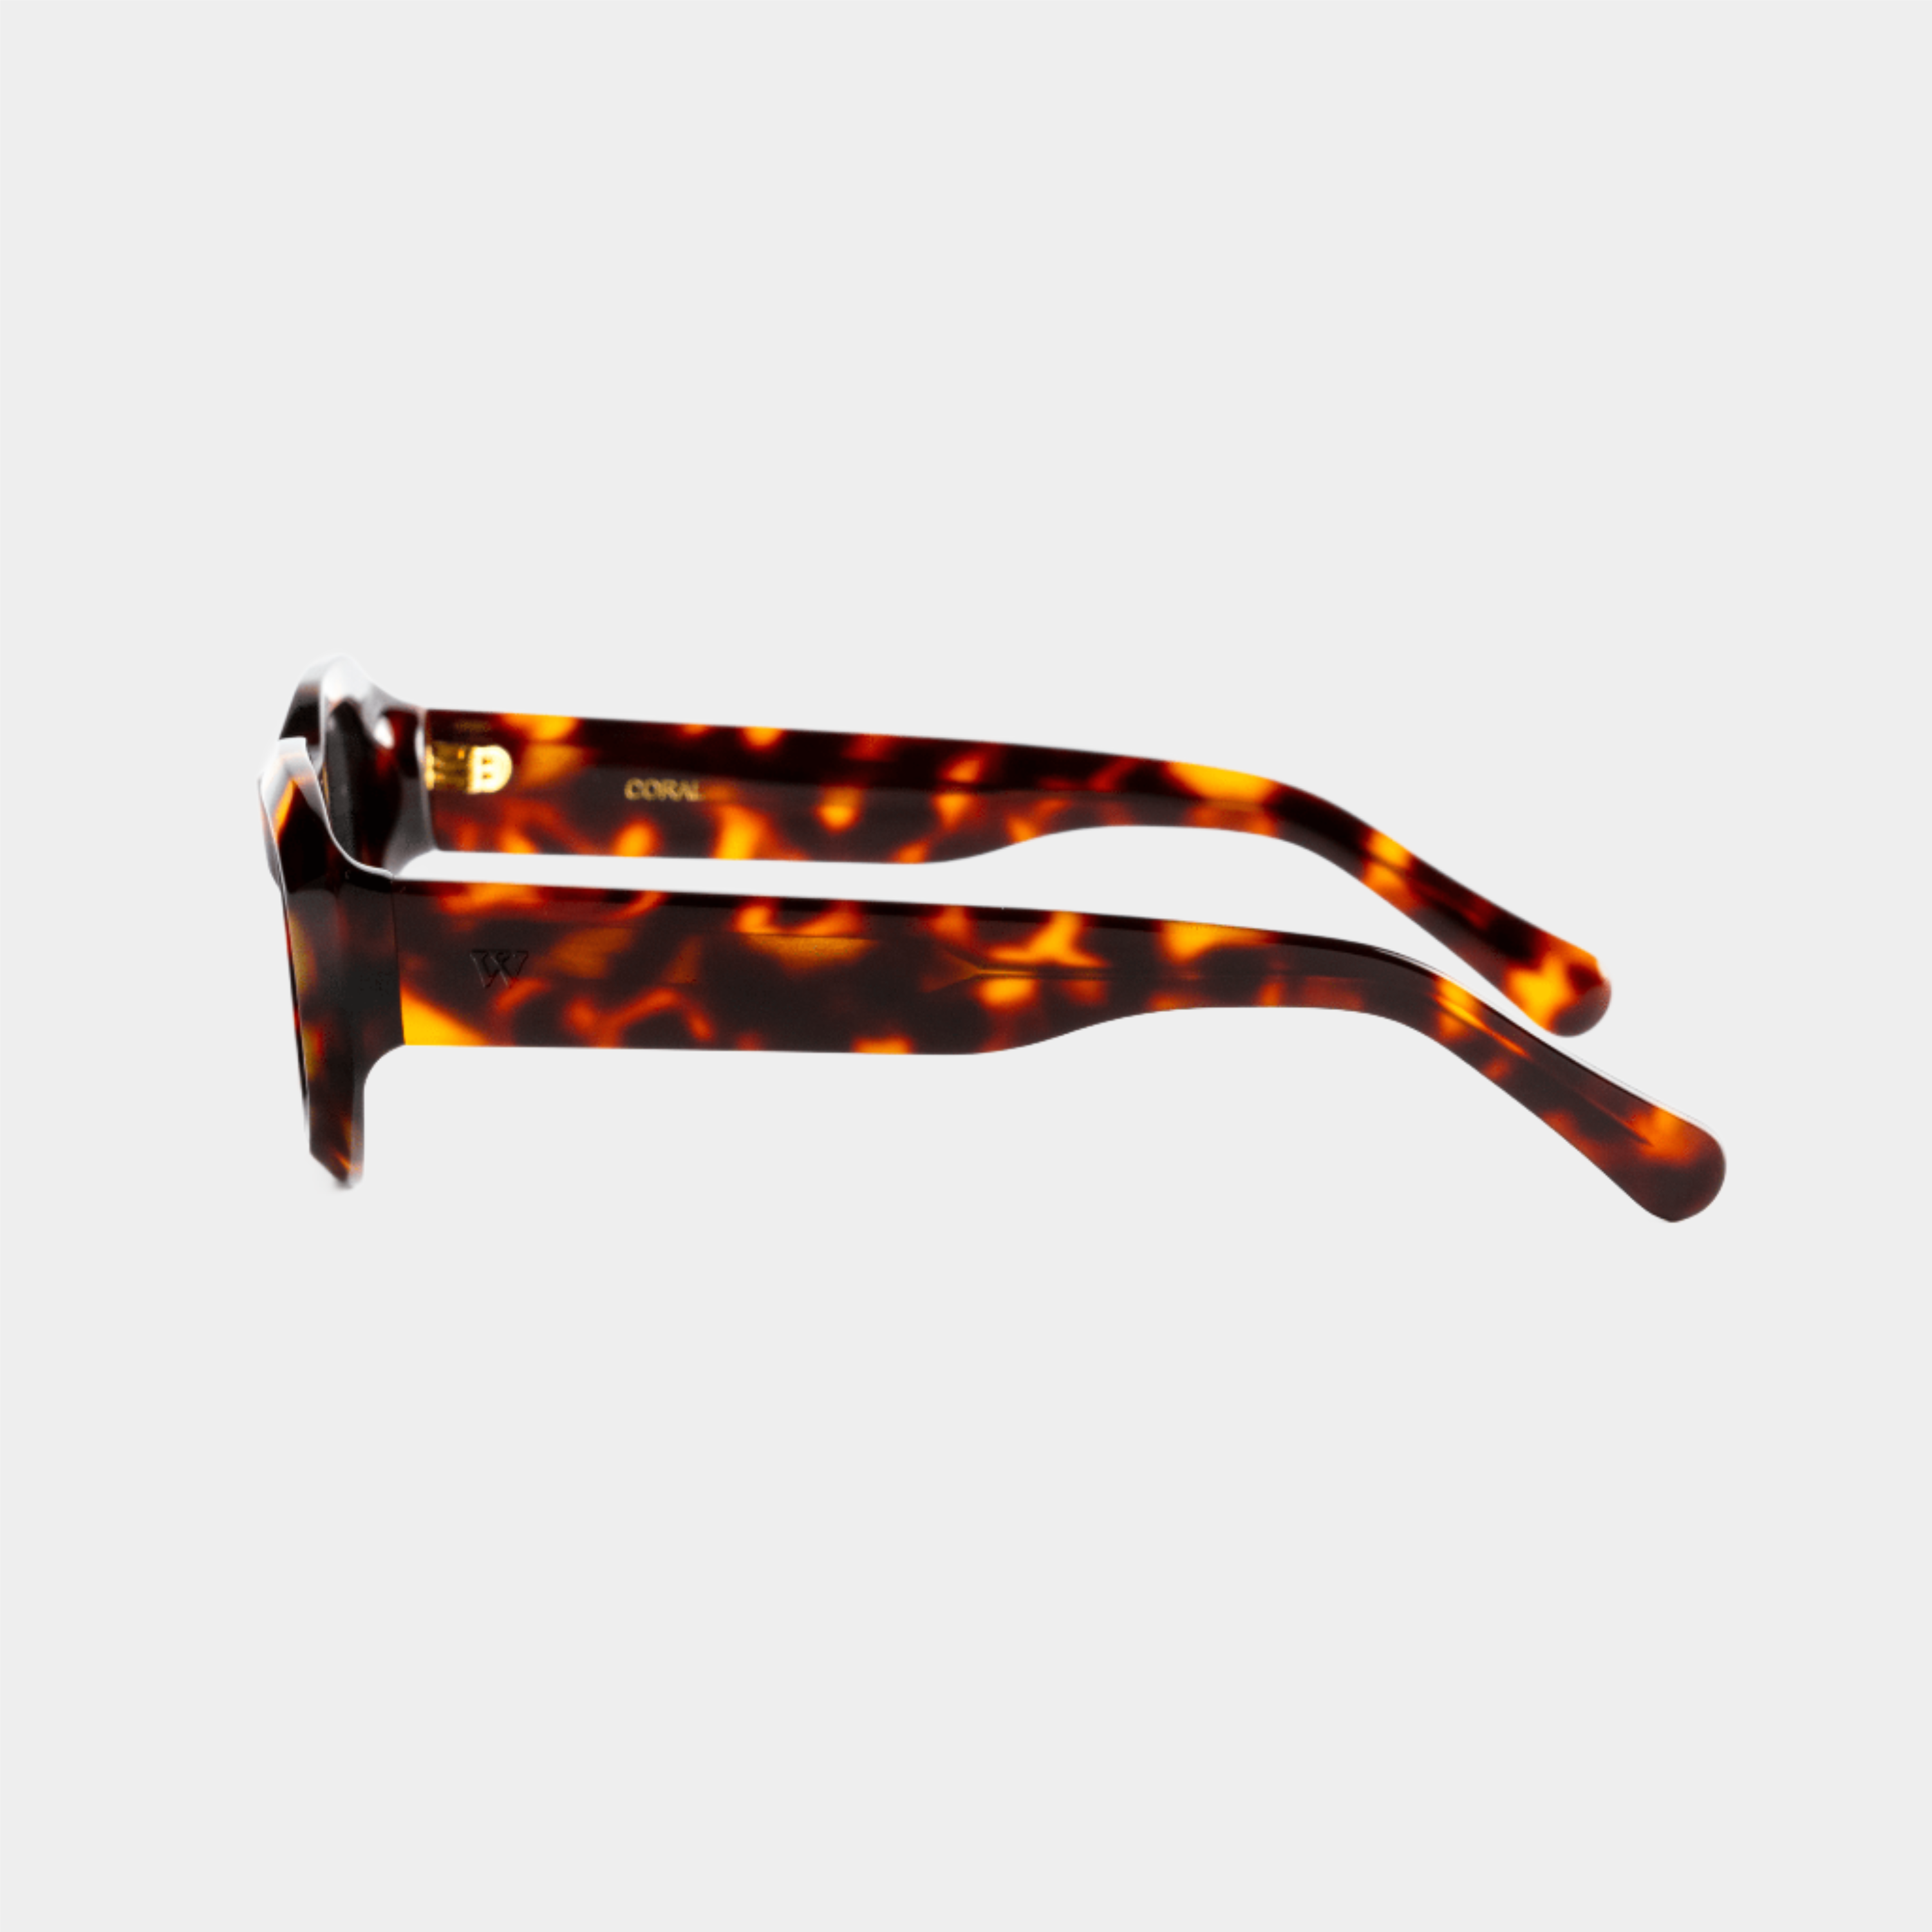 Walter Hill Sunglasses Medium/Large / Polarized Cat.3 / Mazzucchelli Acetate CORAL - Havana